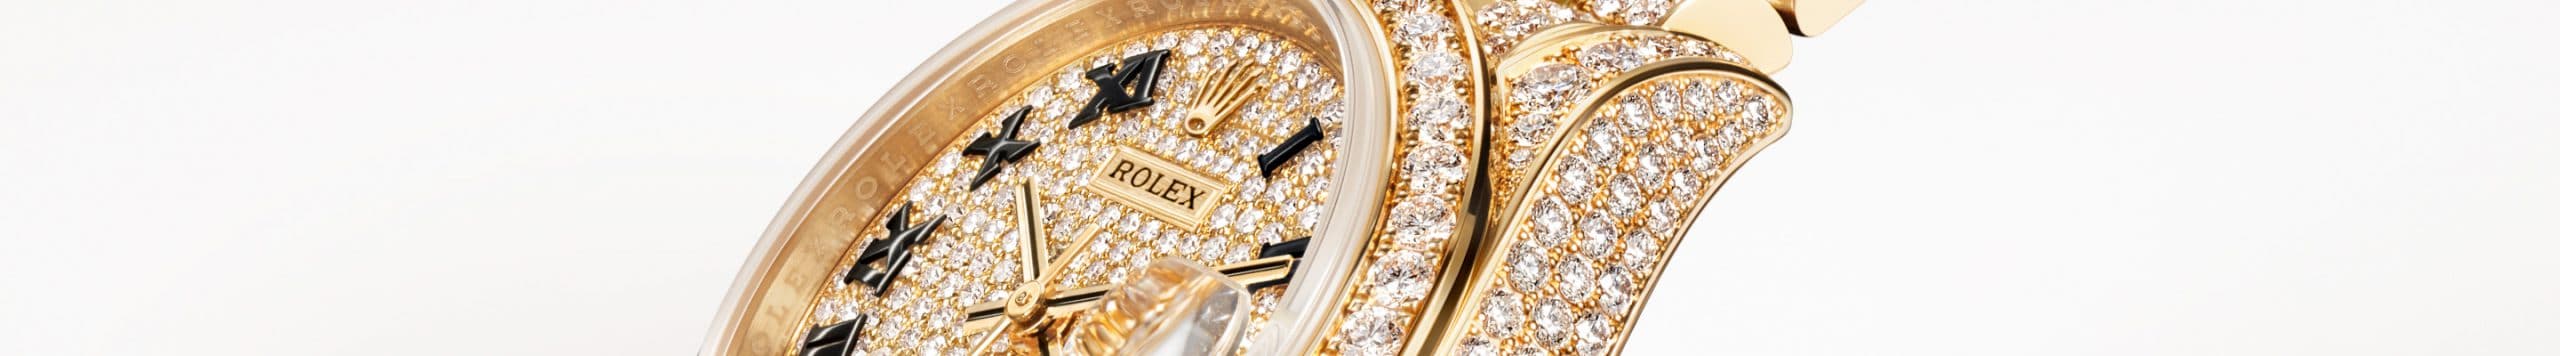 Rolex Lady-Datejust | Rolex Official Retailer - The Time Place Singapore